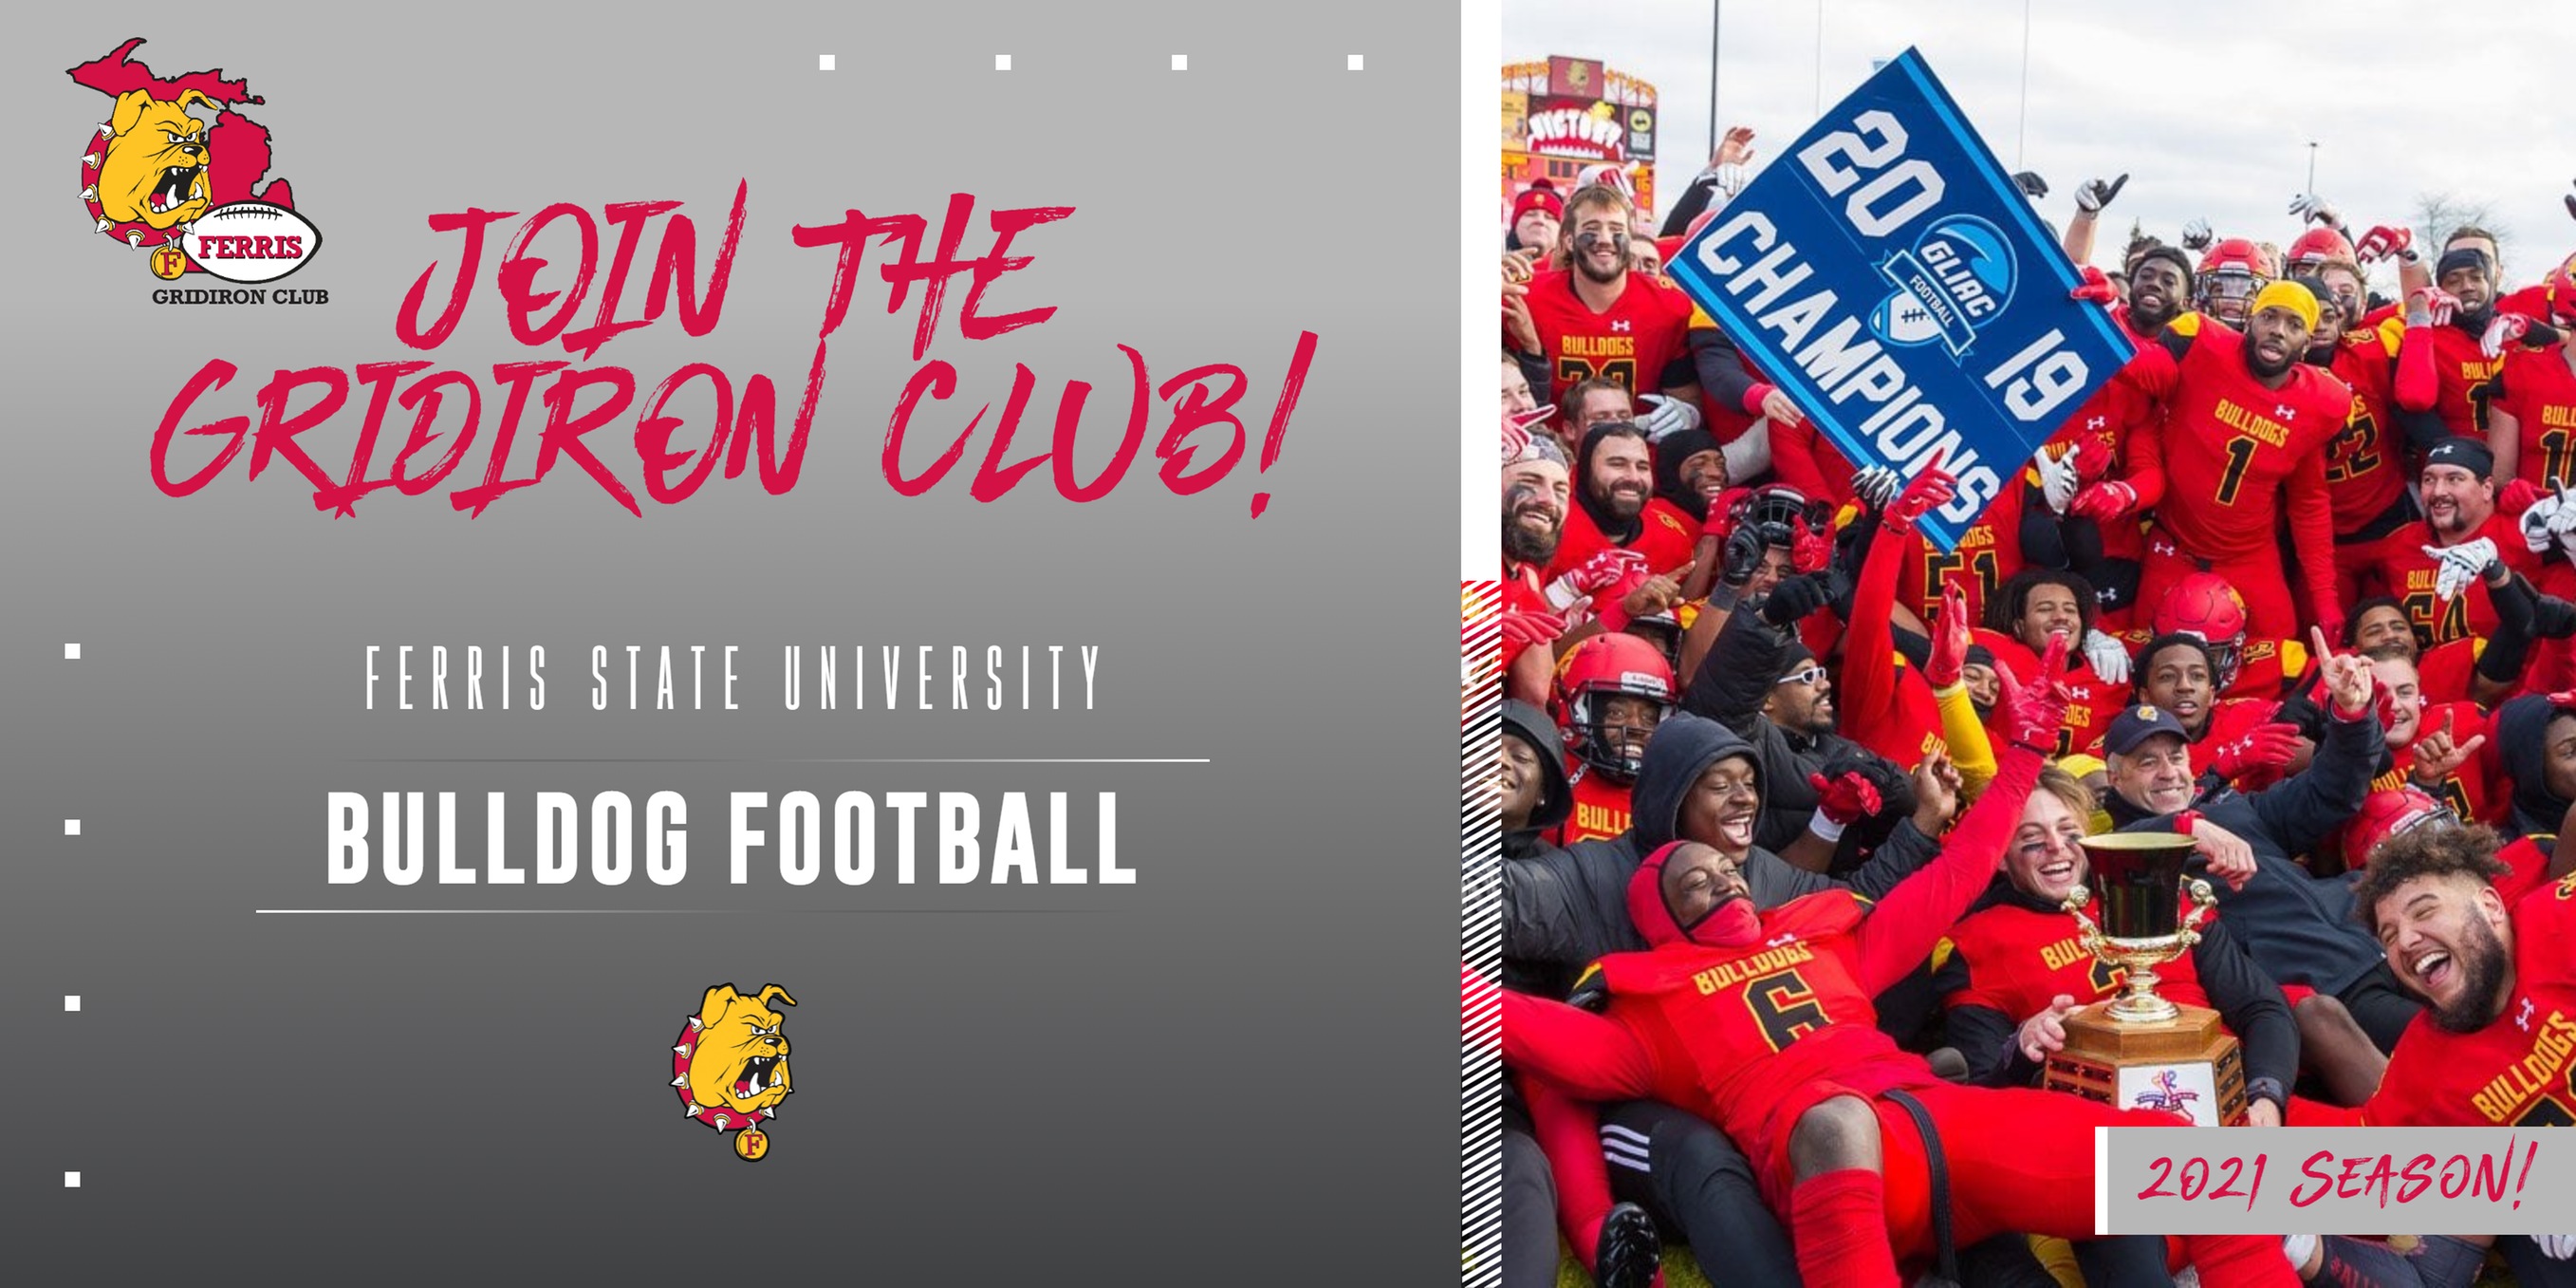 Ferris State Football Gridiron Club Membership Drive Underway! Join Now!